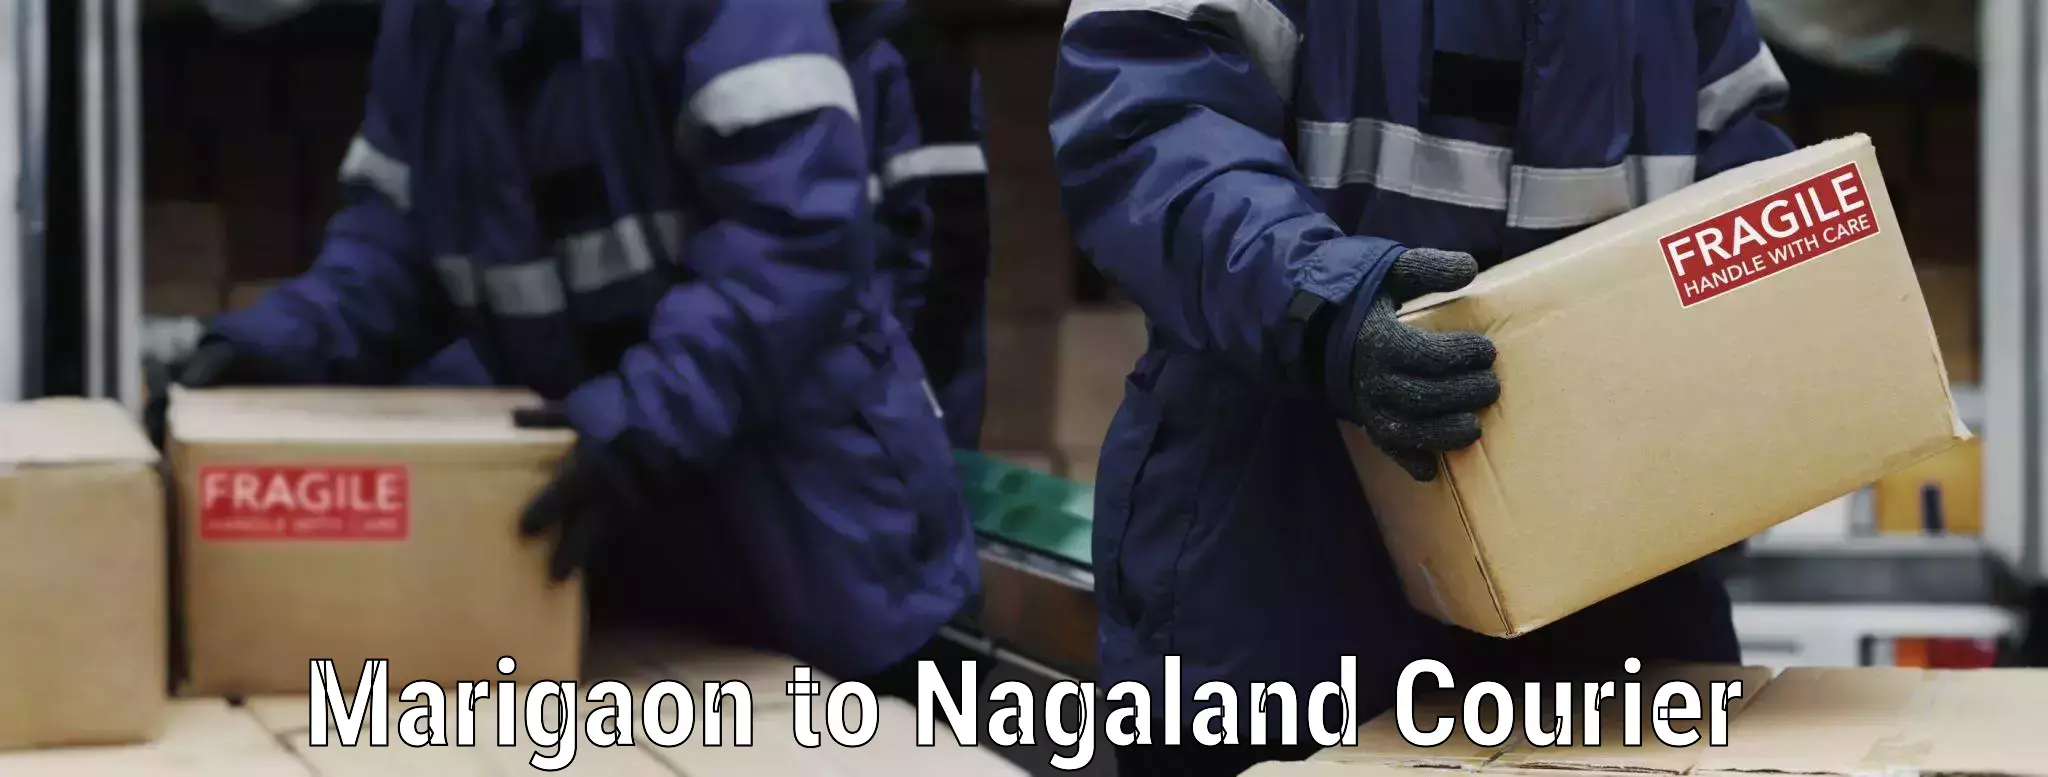 Furniture moving assistance Marigaon to Nagaland